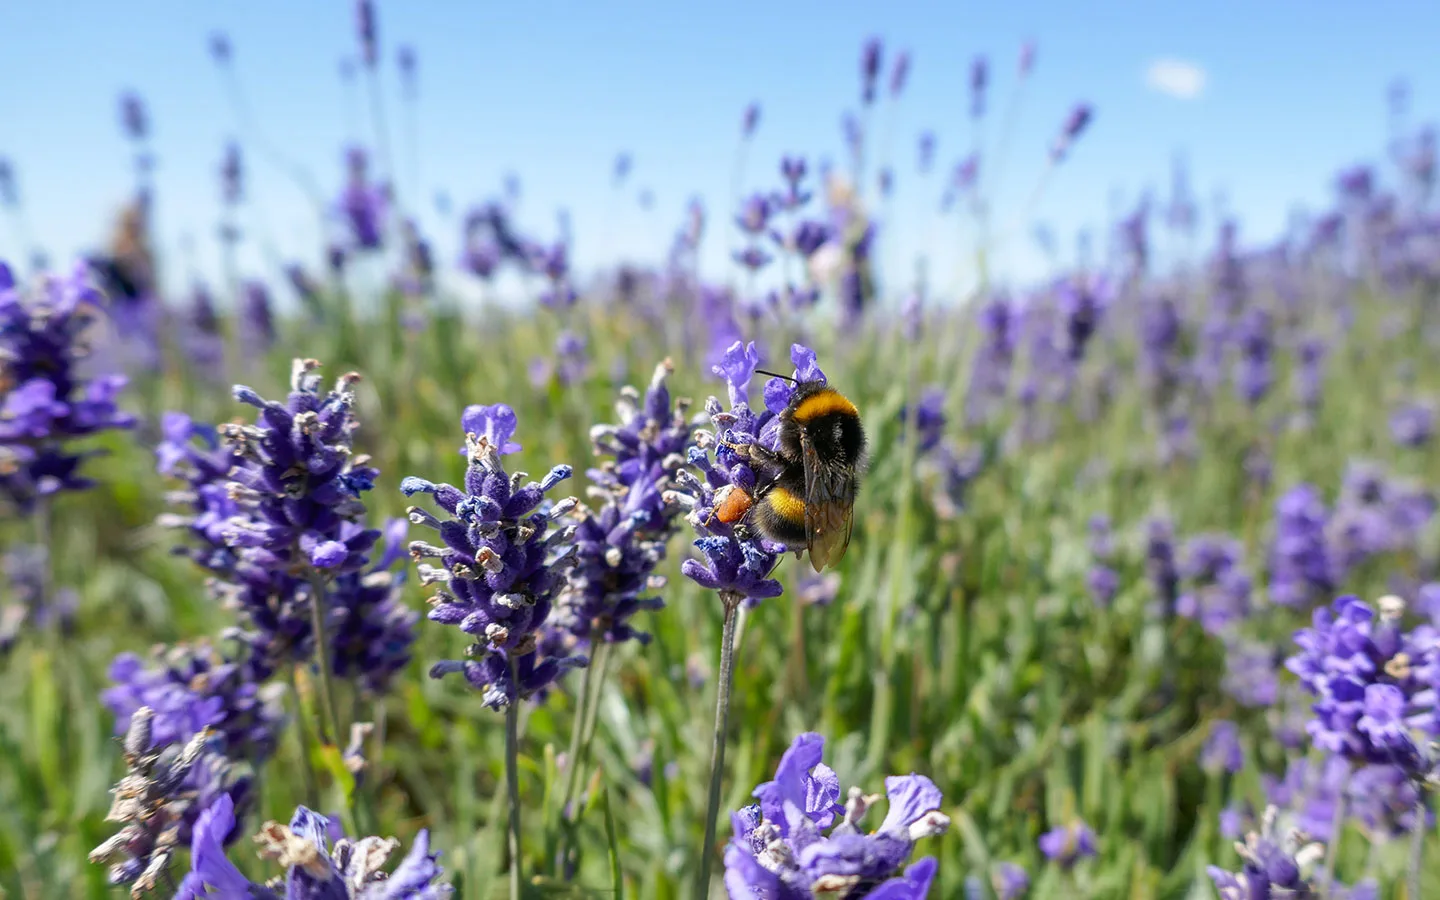 Bee enjoying the lavender flowers